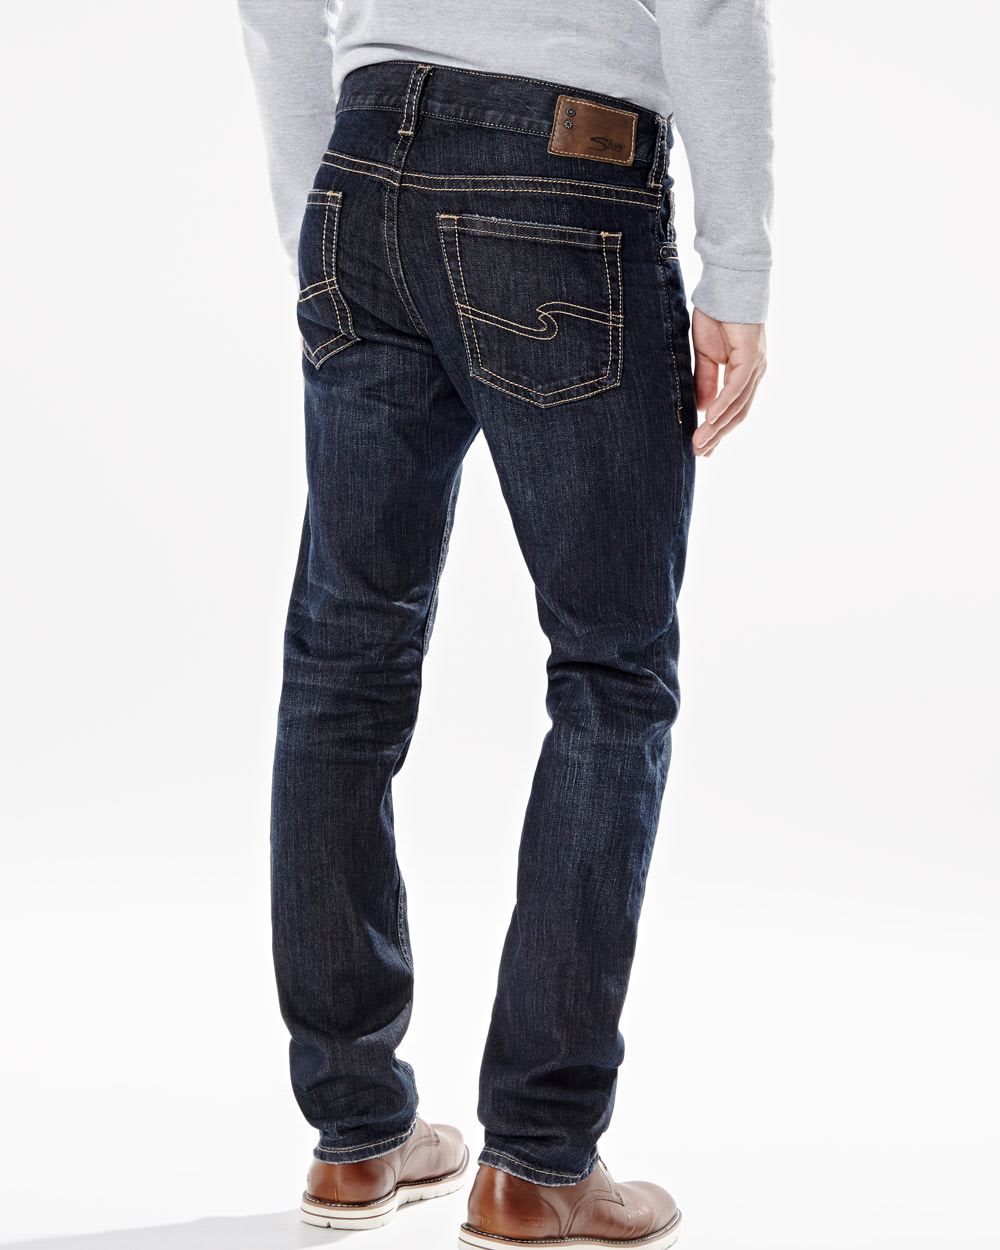 Silver jeans (TM) - Konrad slim fit jean - 32 inch inseam | RW&CO.